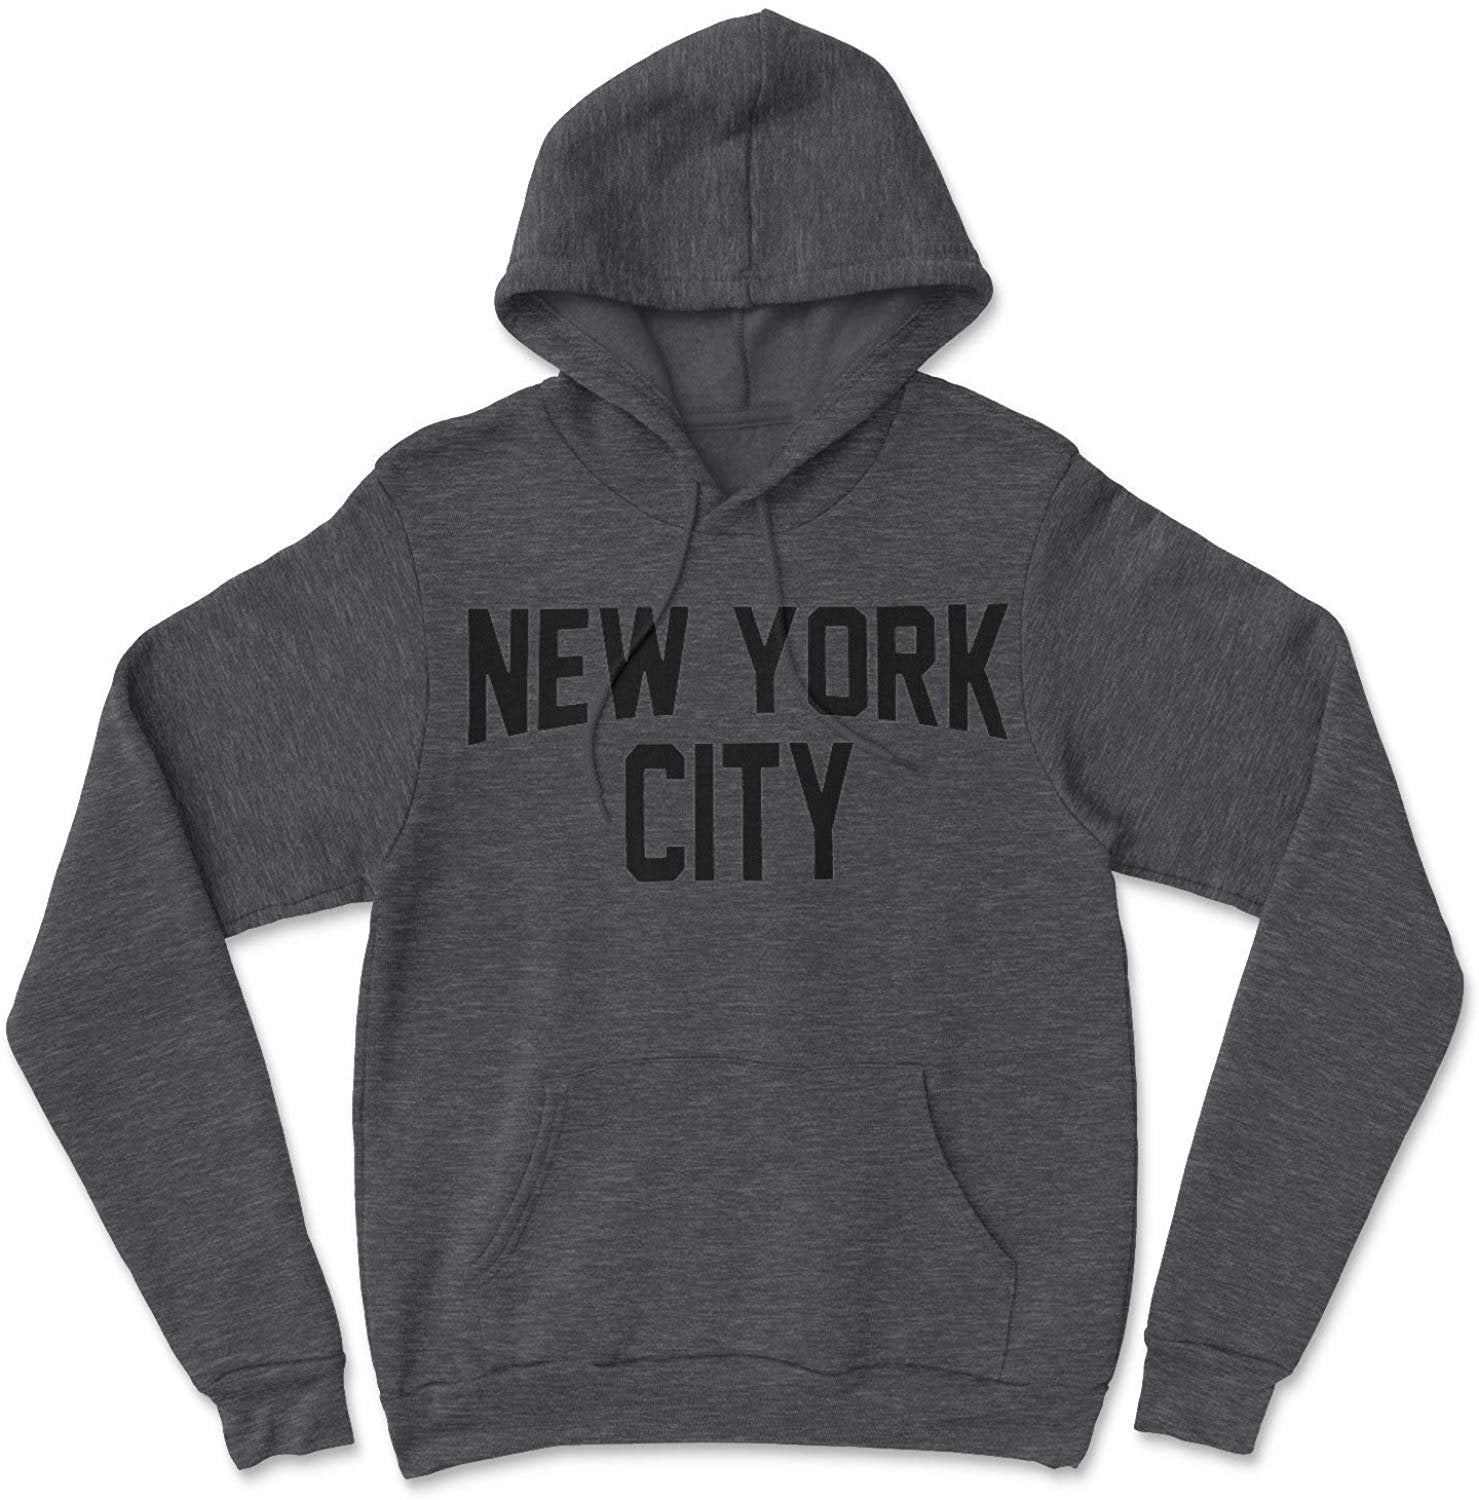 New York City Hoodie Men's Shirt Dark Heather Charcoal Screen-Printed Sweatshirt